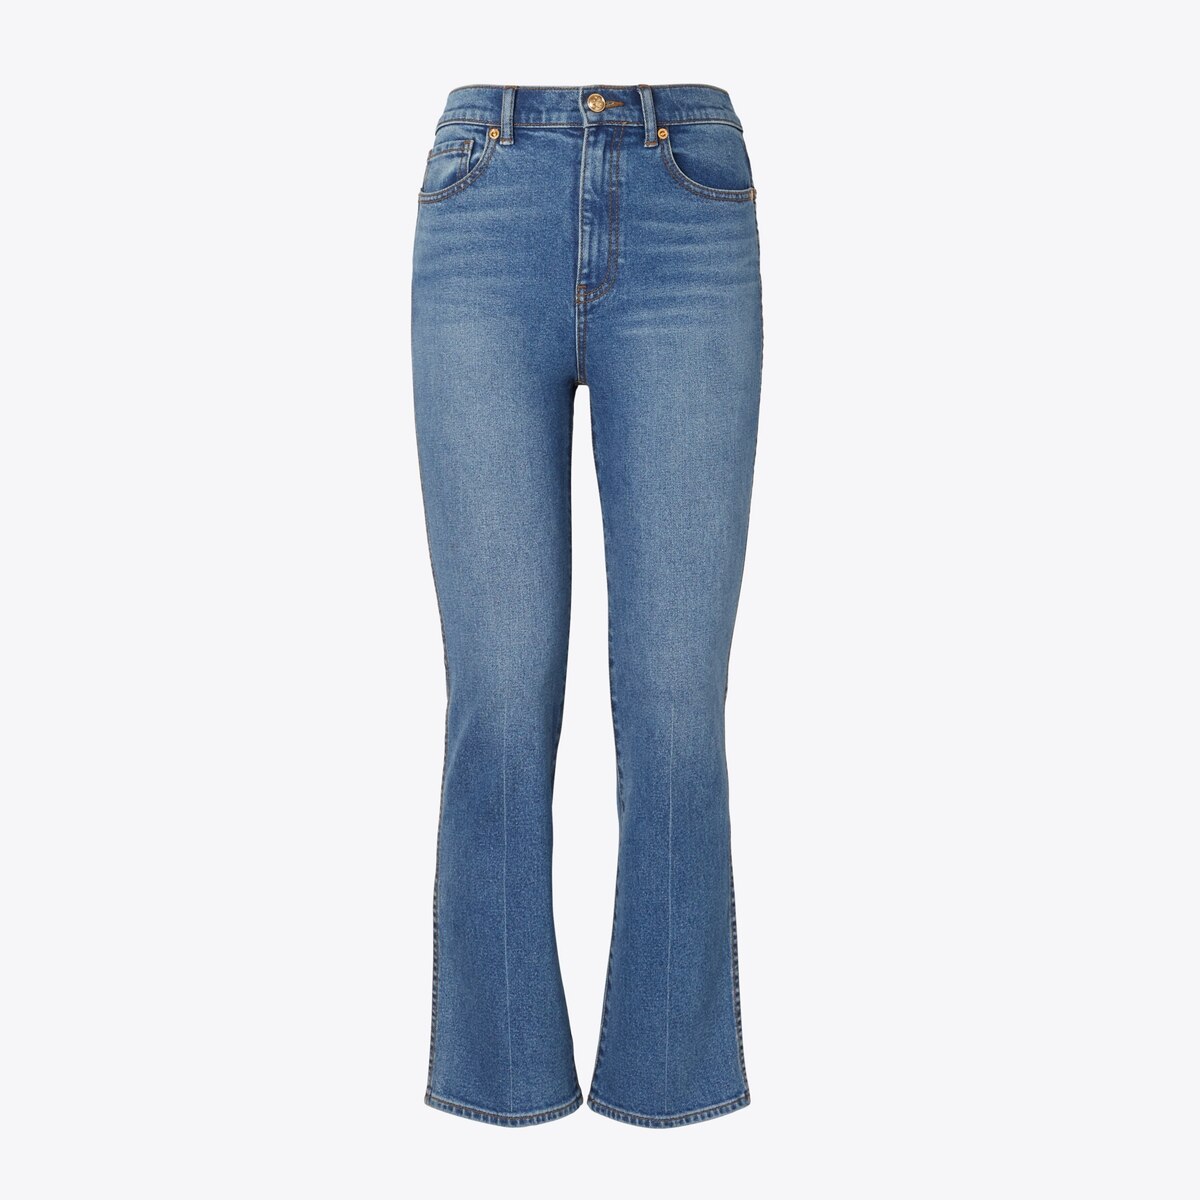 best looking jeans for ladies